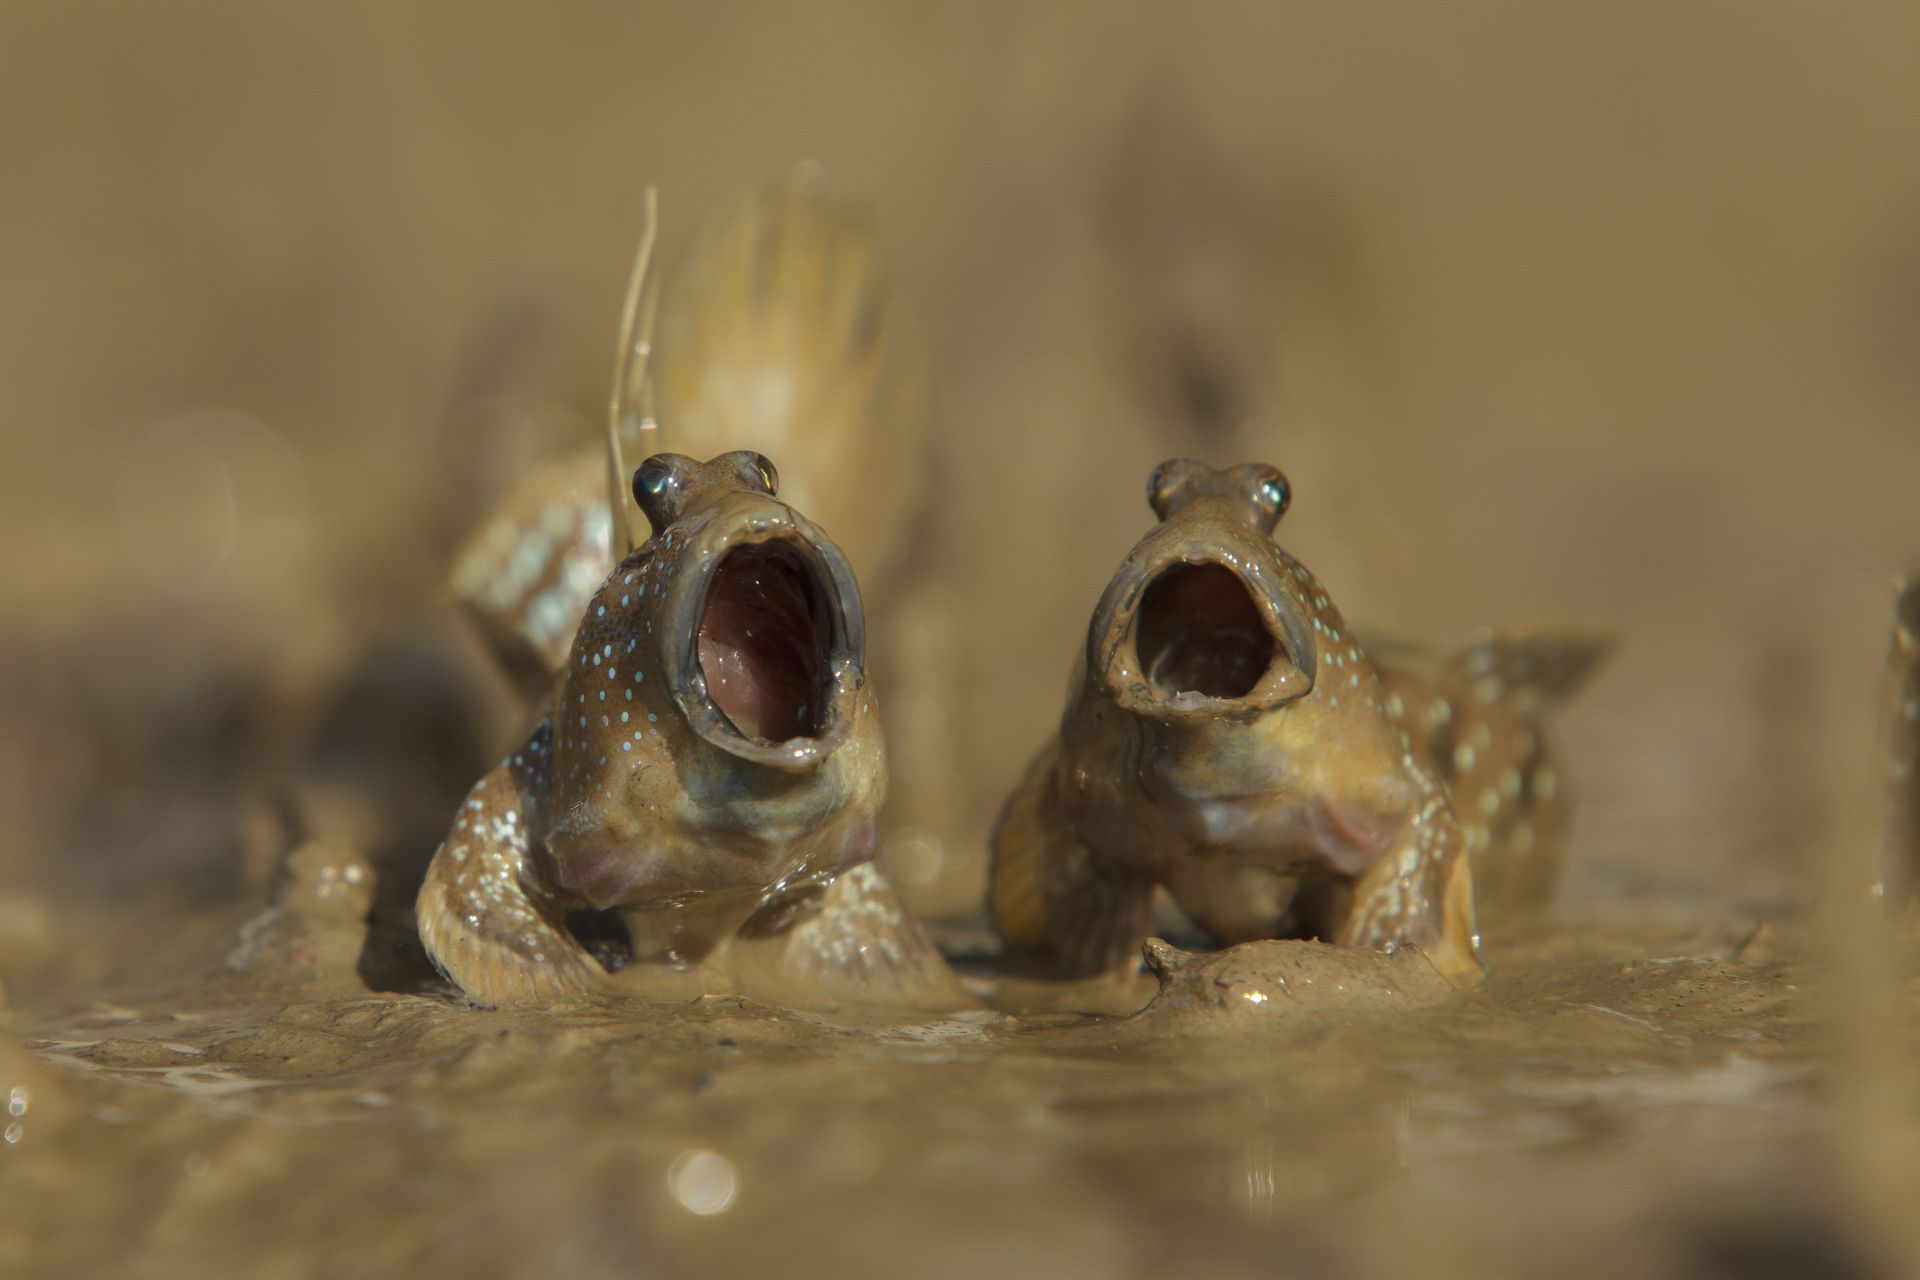 Mudskippers take a last big breath before the tide comes in, photo by Daniel Tim